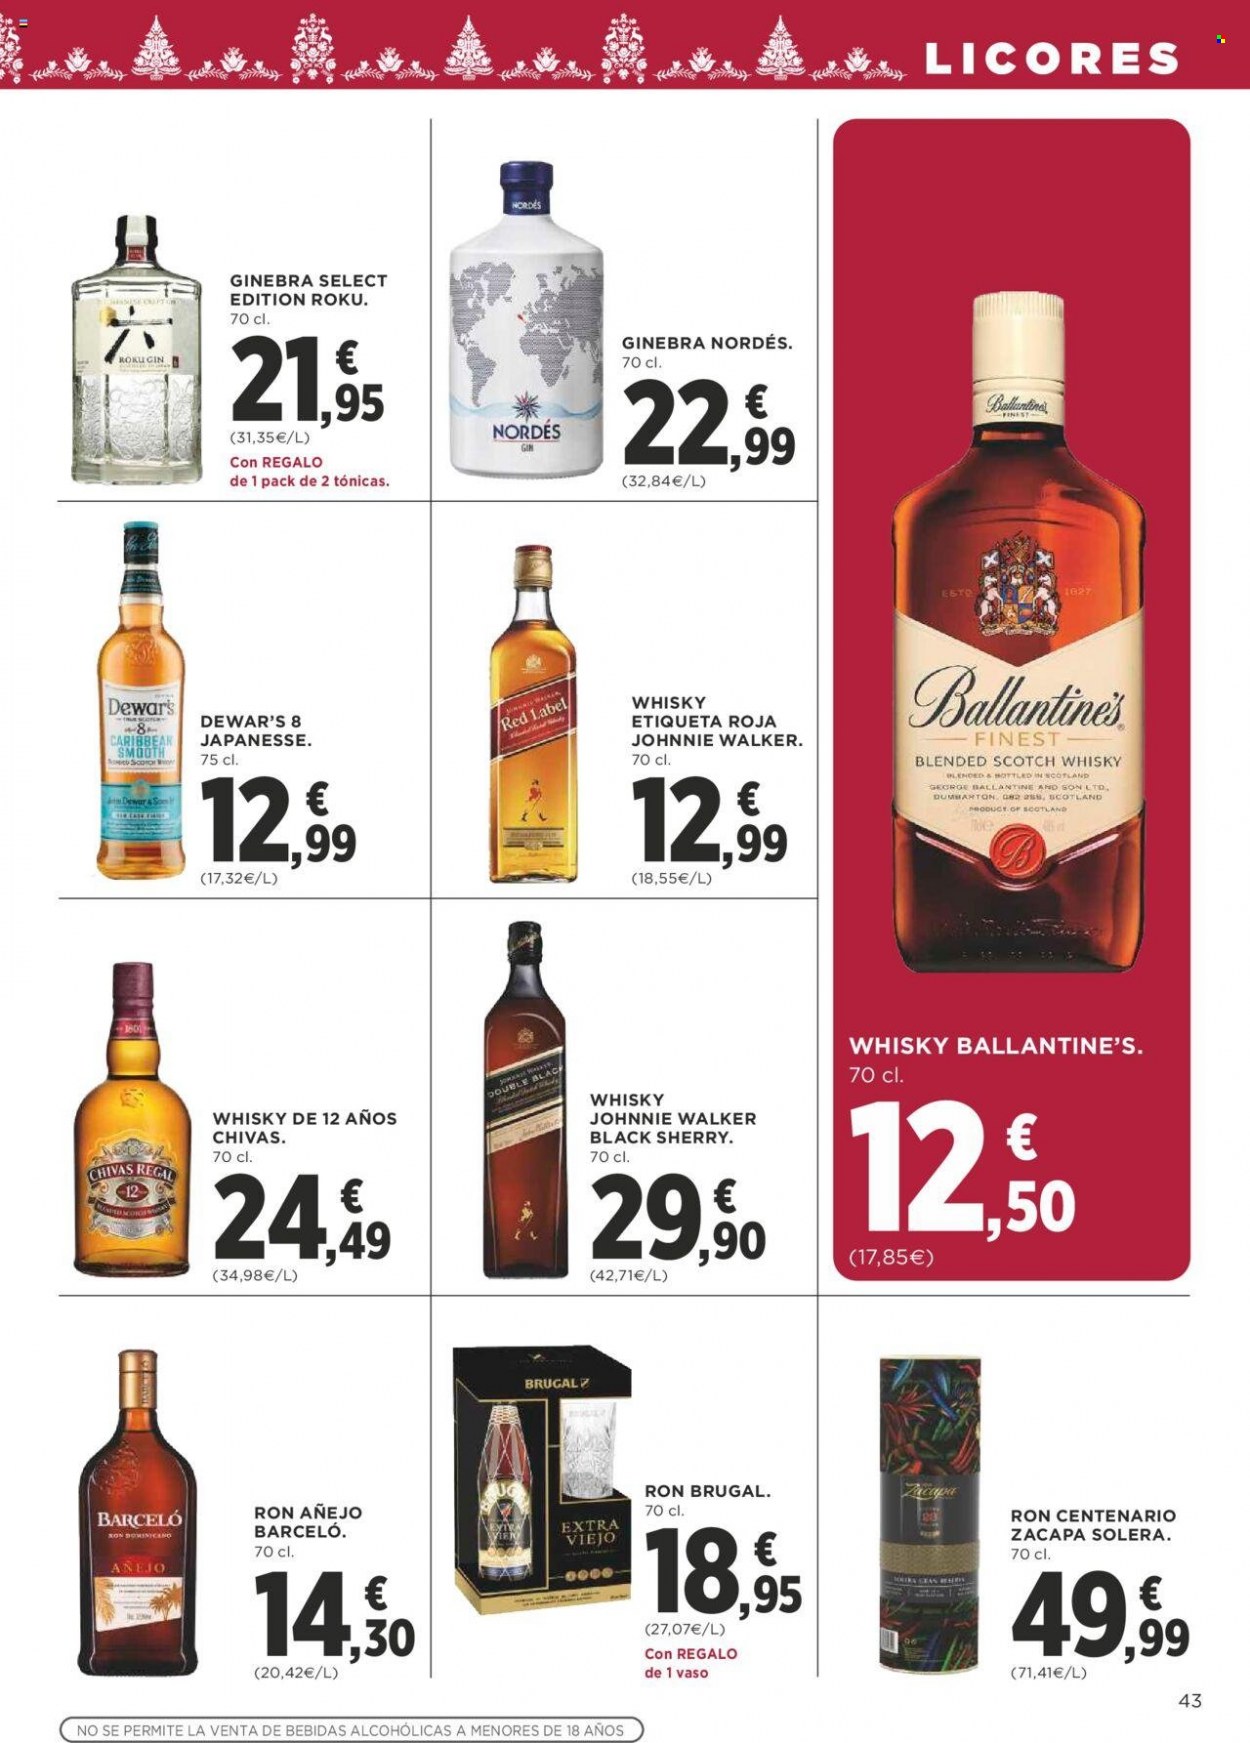 thumbnail - Folleto actual Supercor supermercados - 01/12/22 - 14/12/22 - Ventas - tonica, ron, Ballantine's, Barceló, Brugal, gin, Johnnie Walker, licor, whisky, Zacapa, Scotch Whisky, Red Label, Chivas Regal, Dewar's, ron añejo. Página 43.